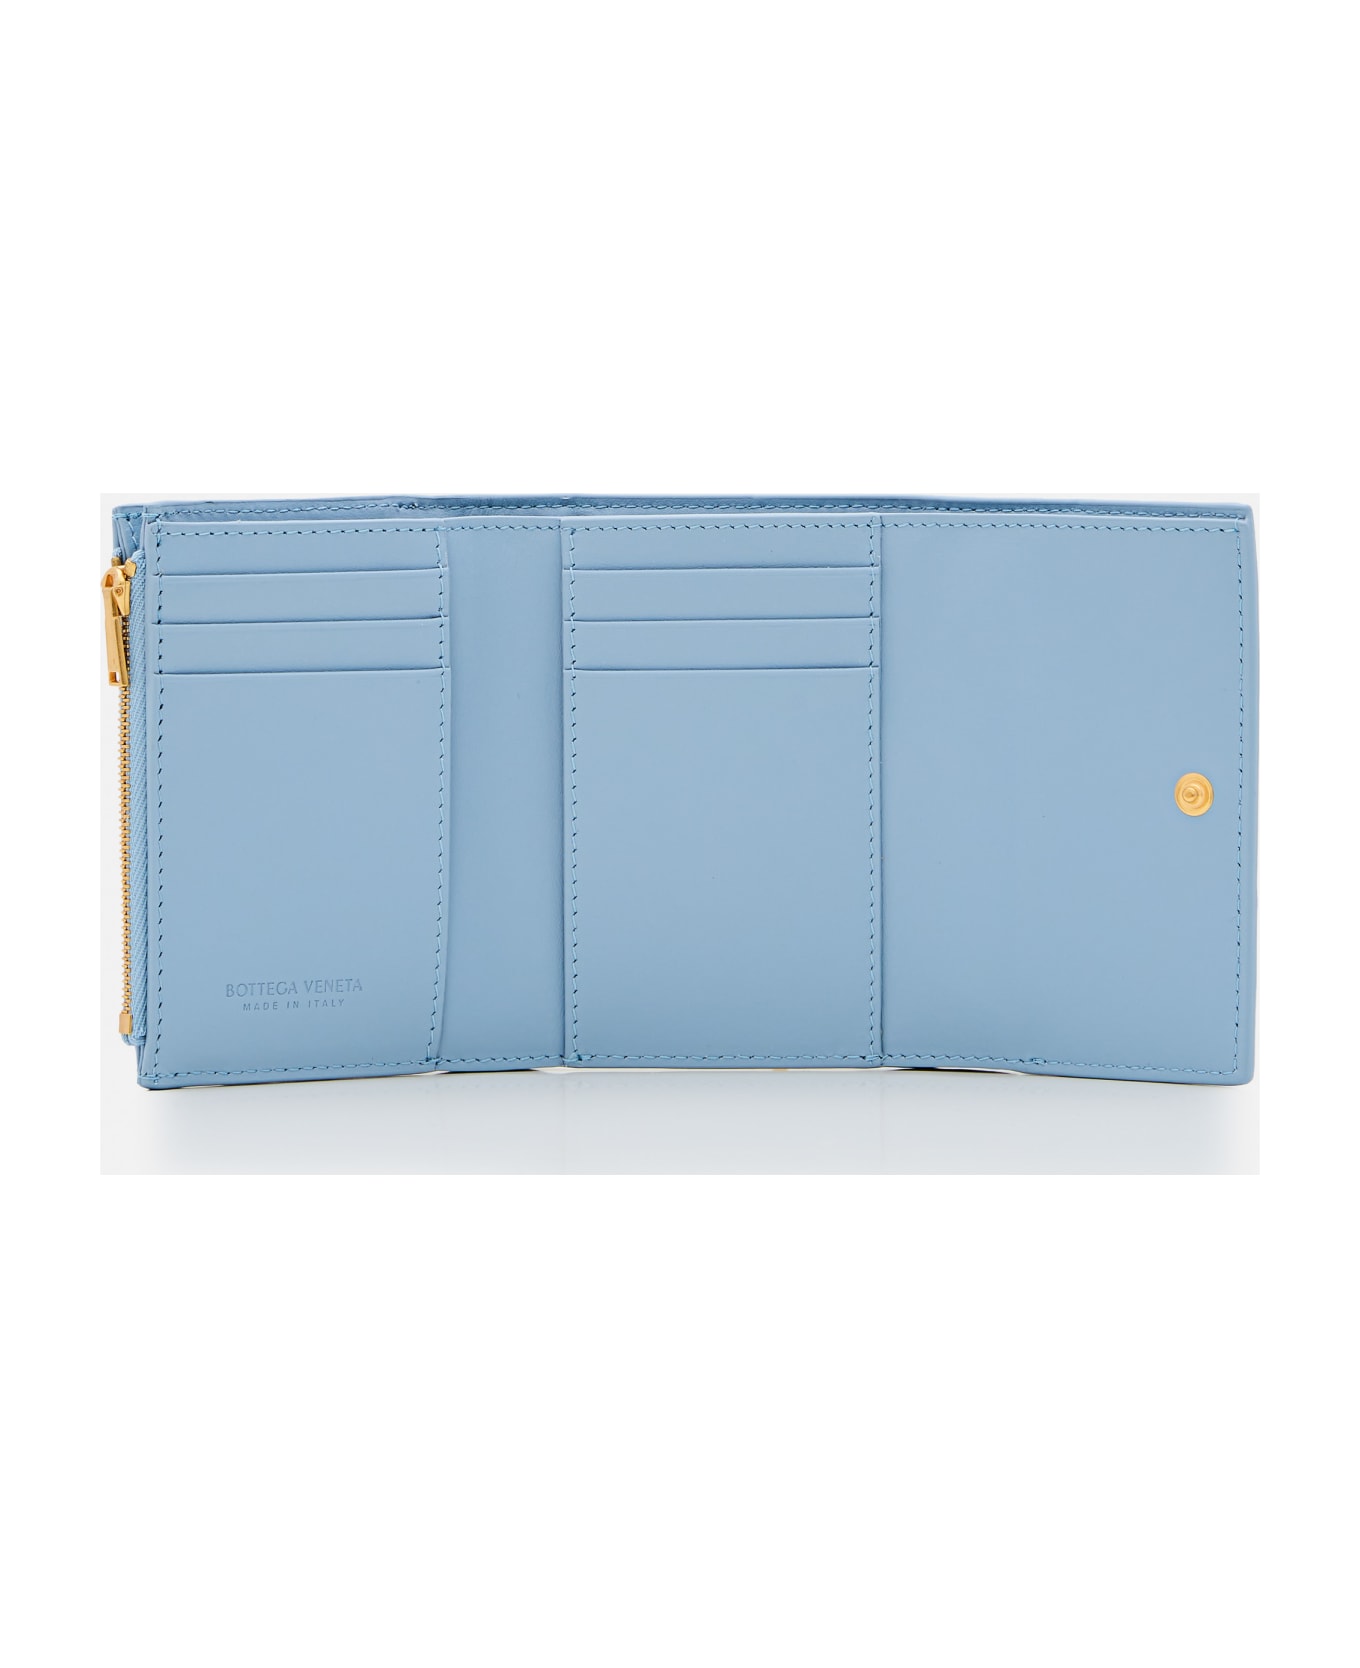 Bottega Veneta Tri-fold Leather Wallet - Clear Blue 財布